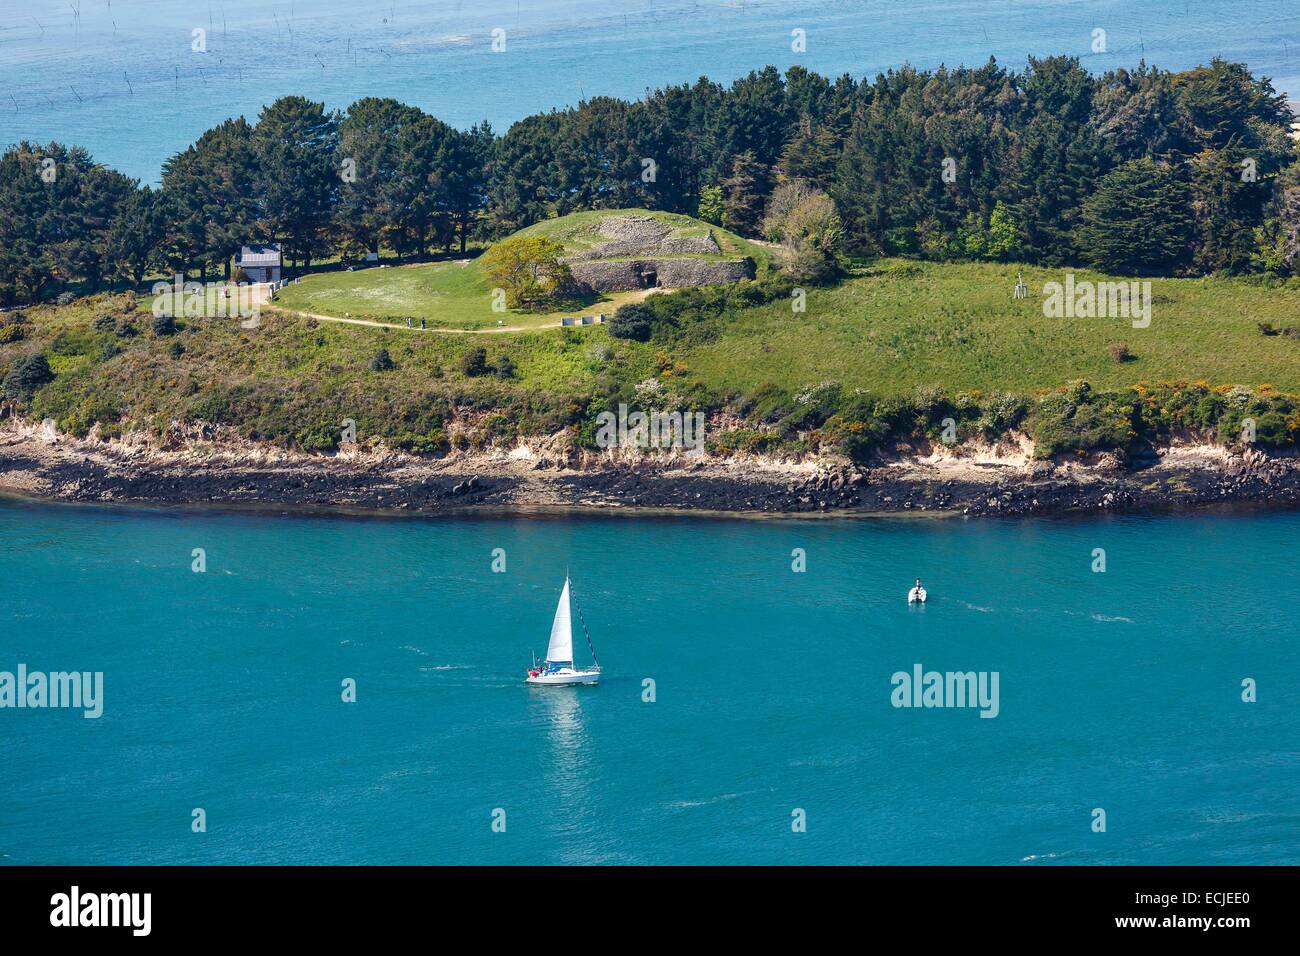 France, Morbihan, Golfe du Morbihan, Lamor Baden, cairn on Gavrinis island(aerial view) Stock Photo